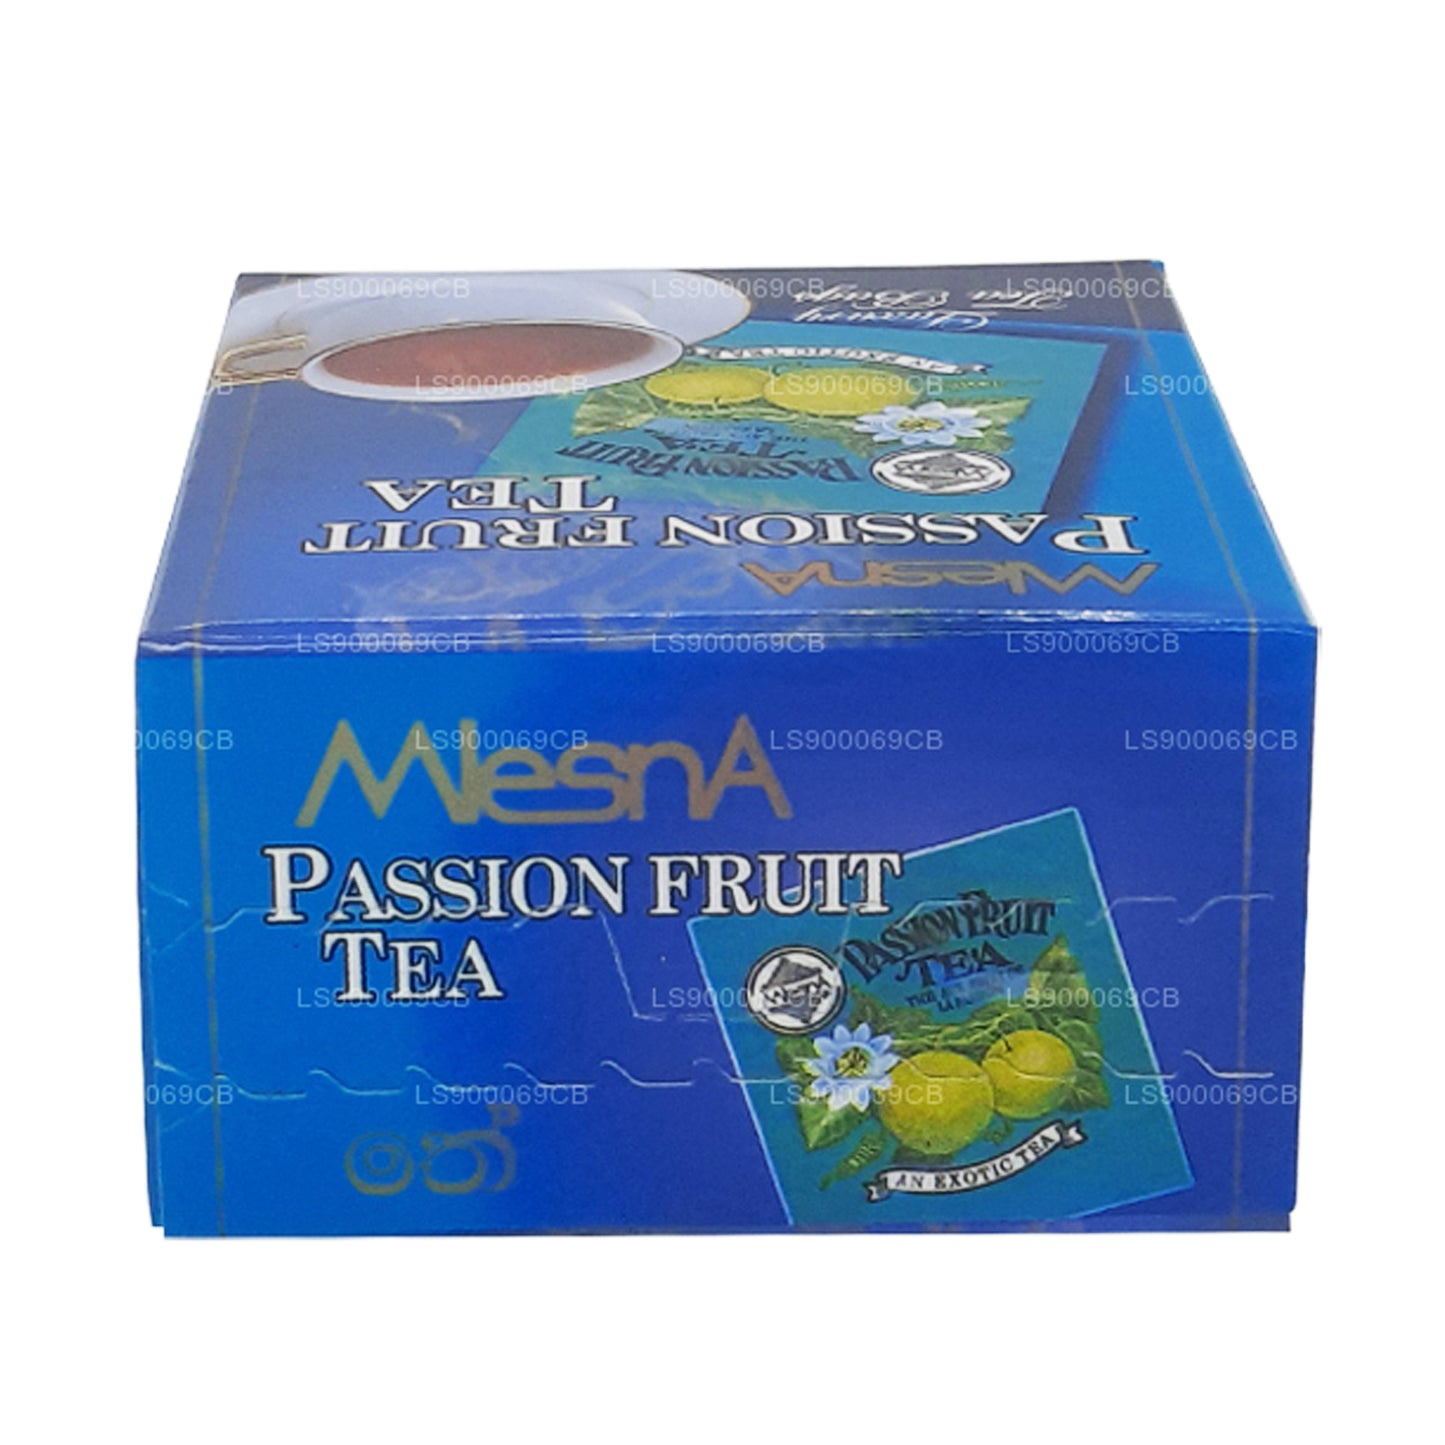 Mlesna Passion Fruit Tea (20g) 10 Luxury Tea Bags